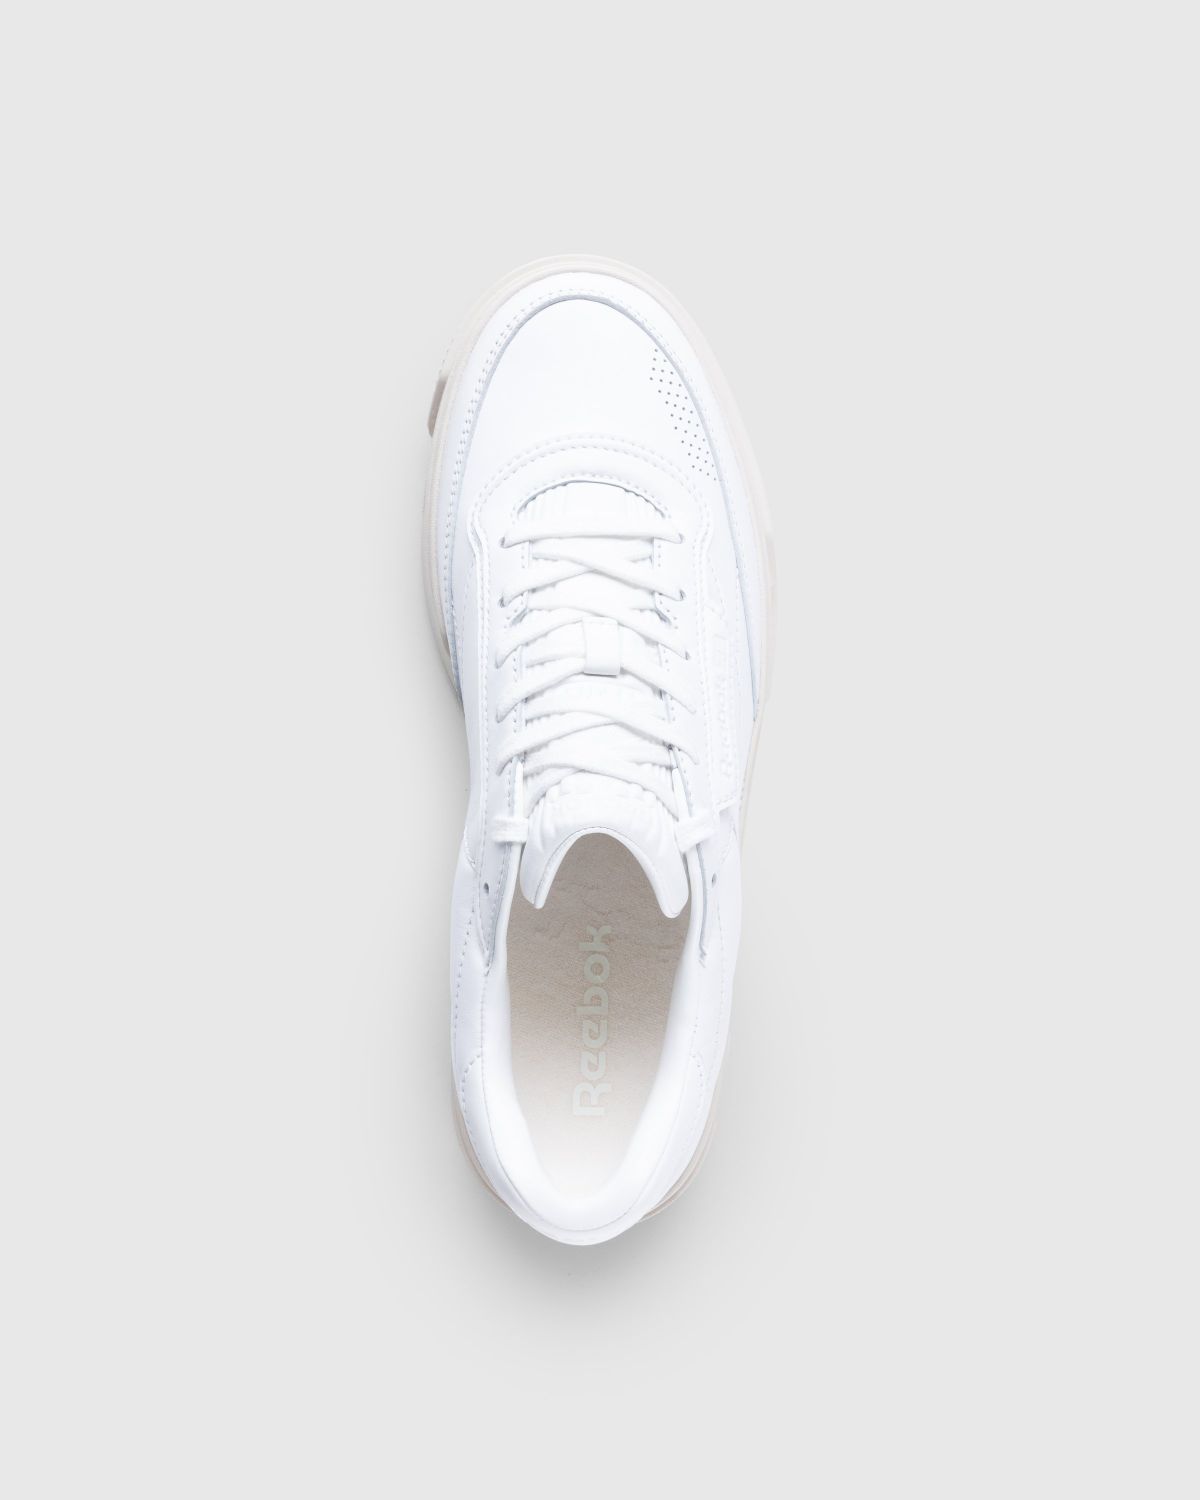 Reebok LTD – CLUB C LTD Leather White  - Sneakers - White - Image 5